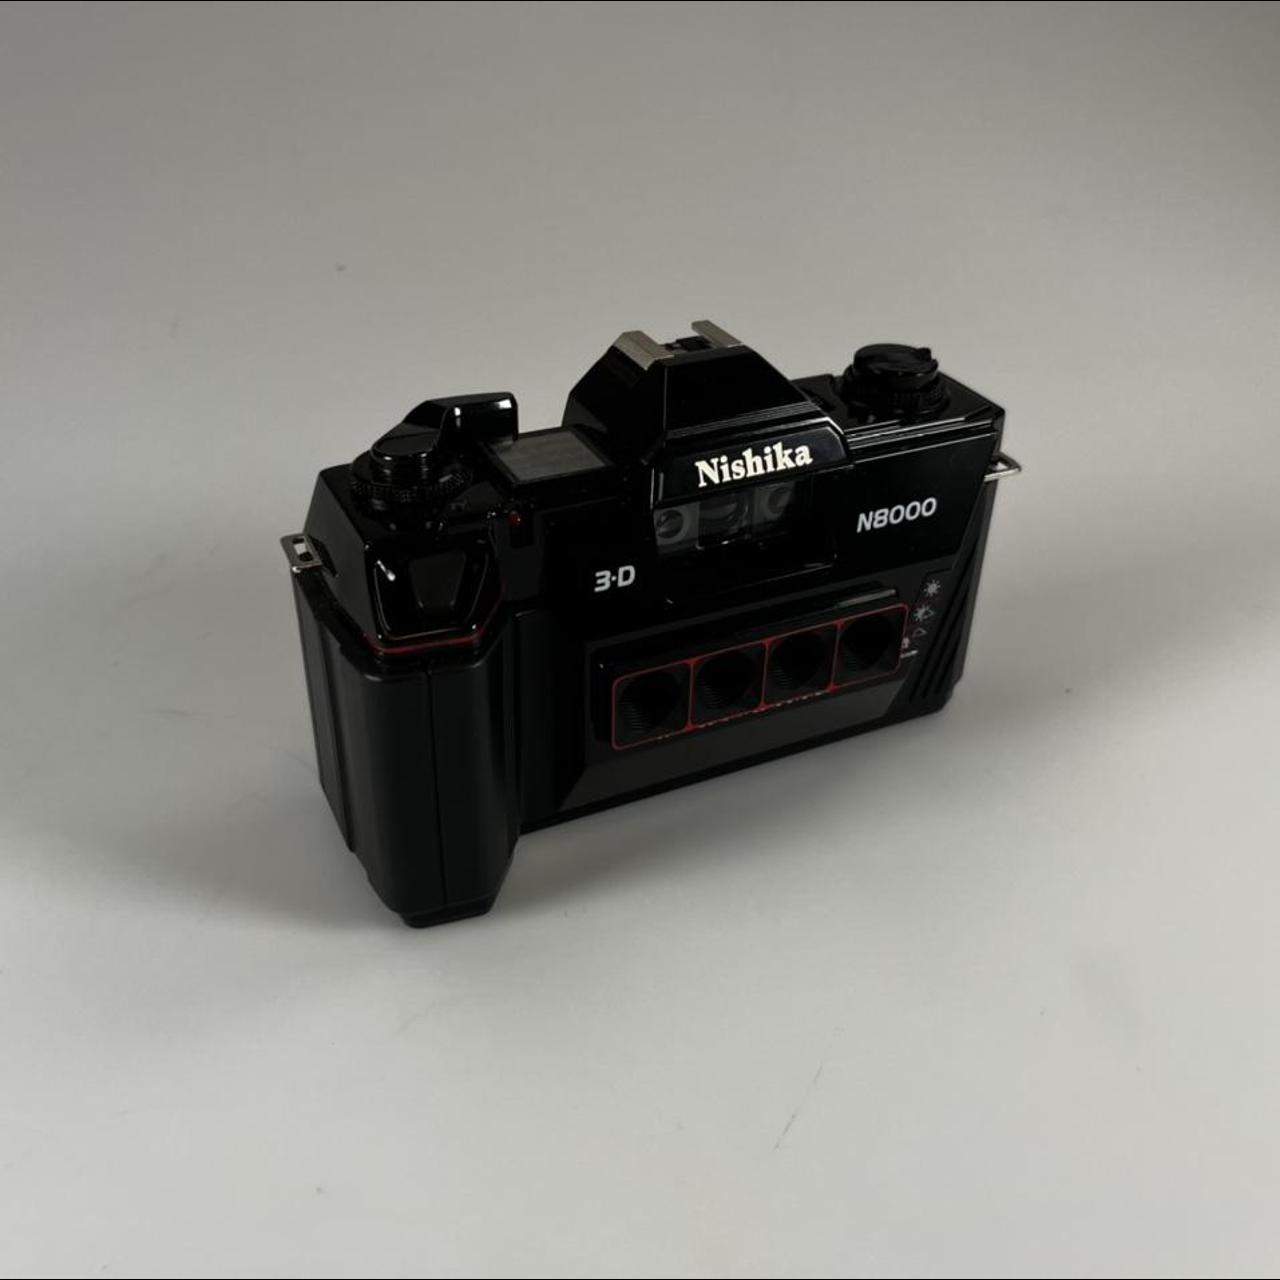 Product Image 2 - Nishika N8000 3D Film Camera

Mint